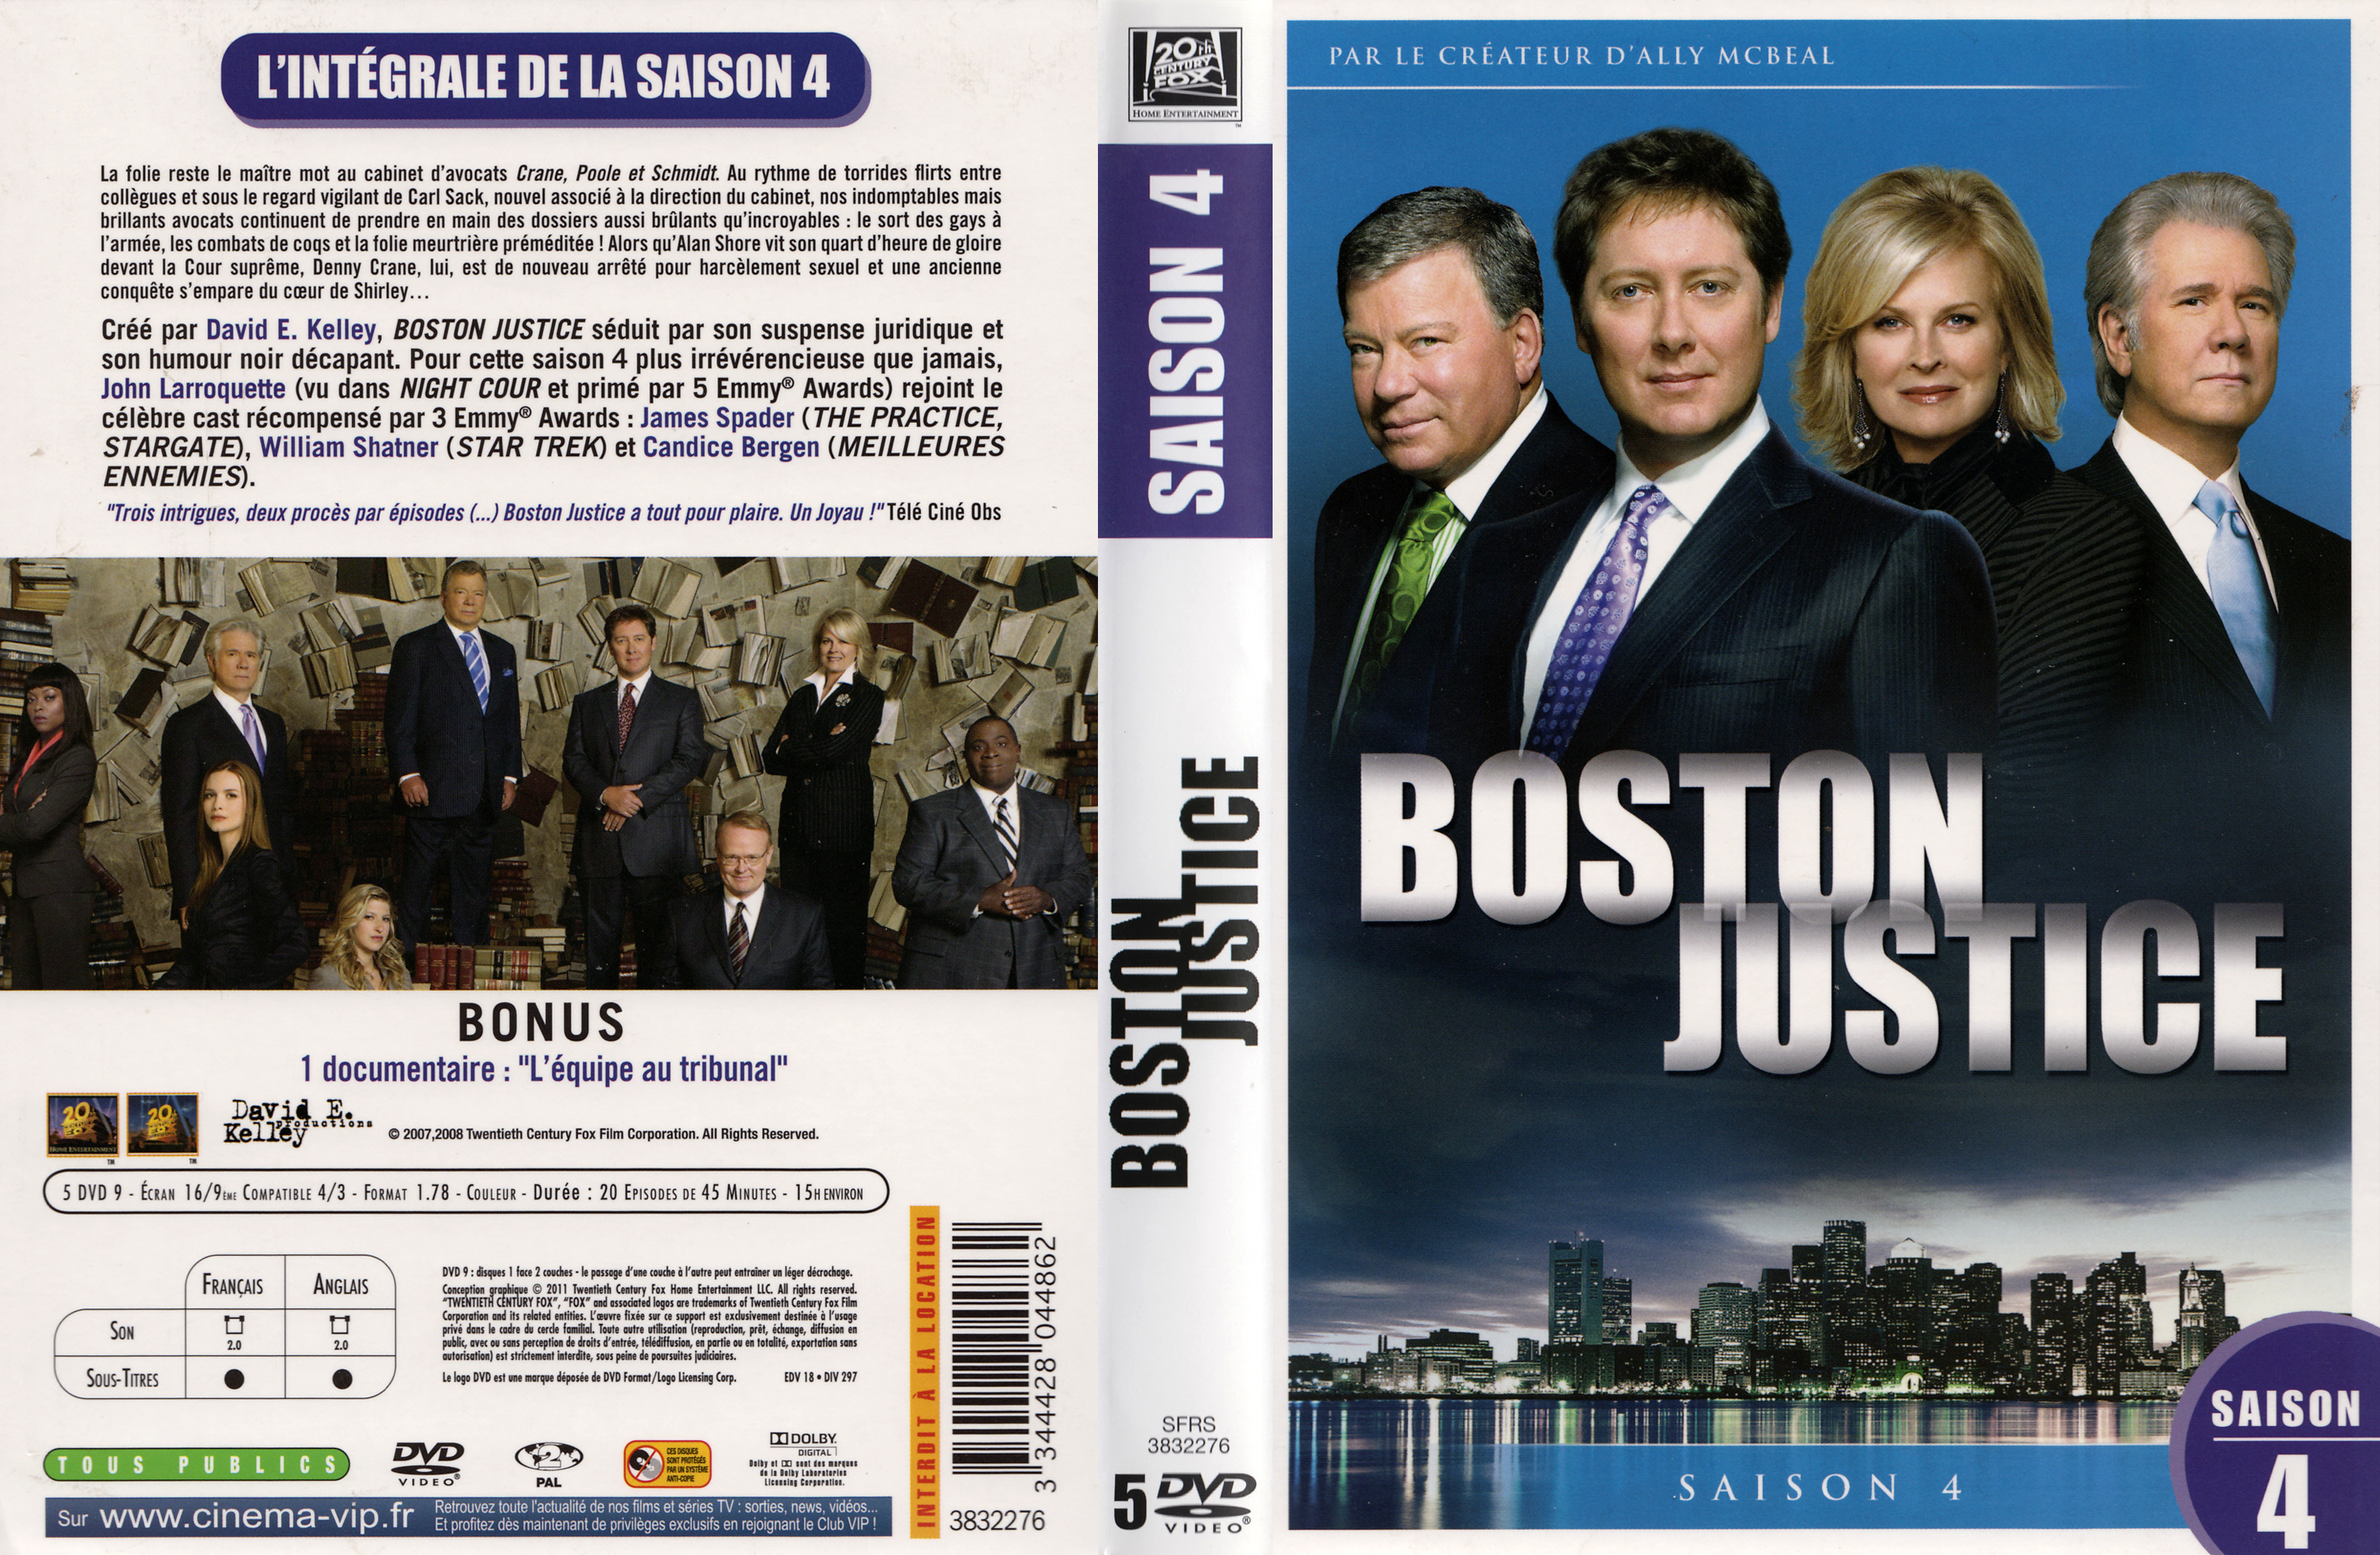 Jaquette DVD Boston justice Saison 4 COFFRET v3